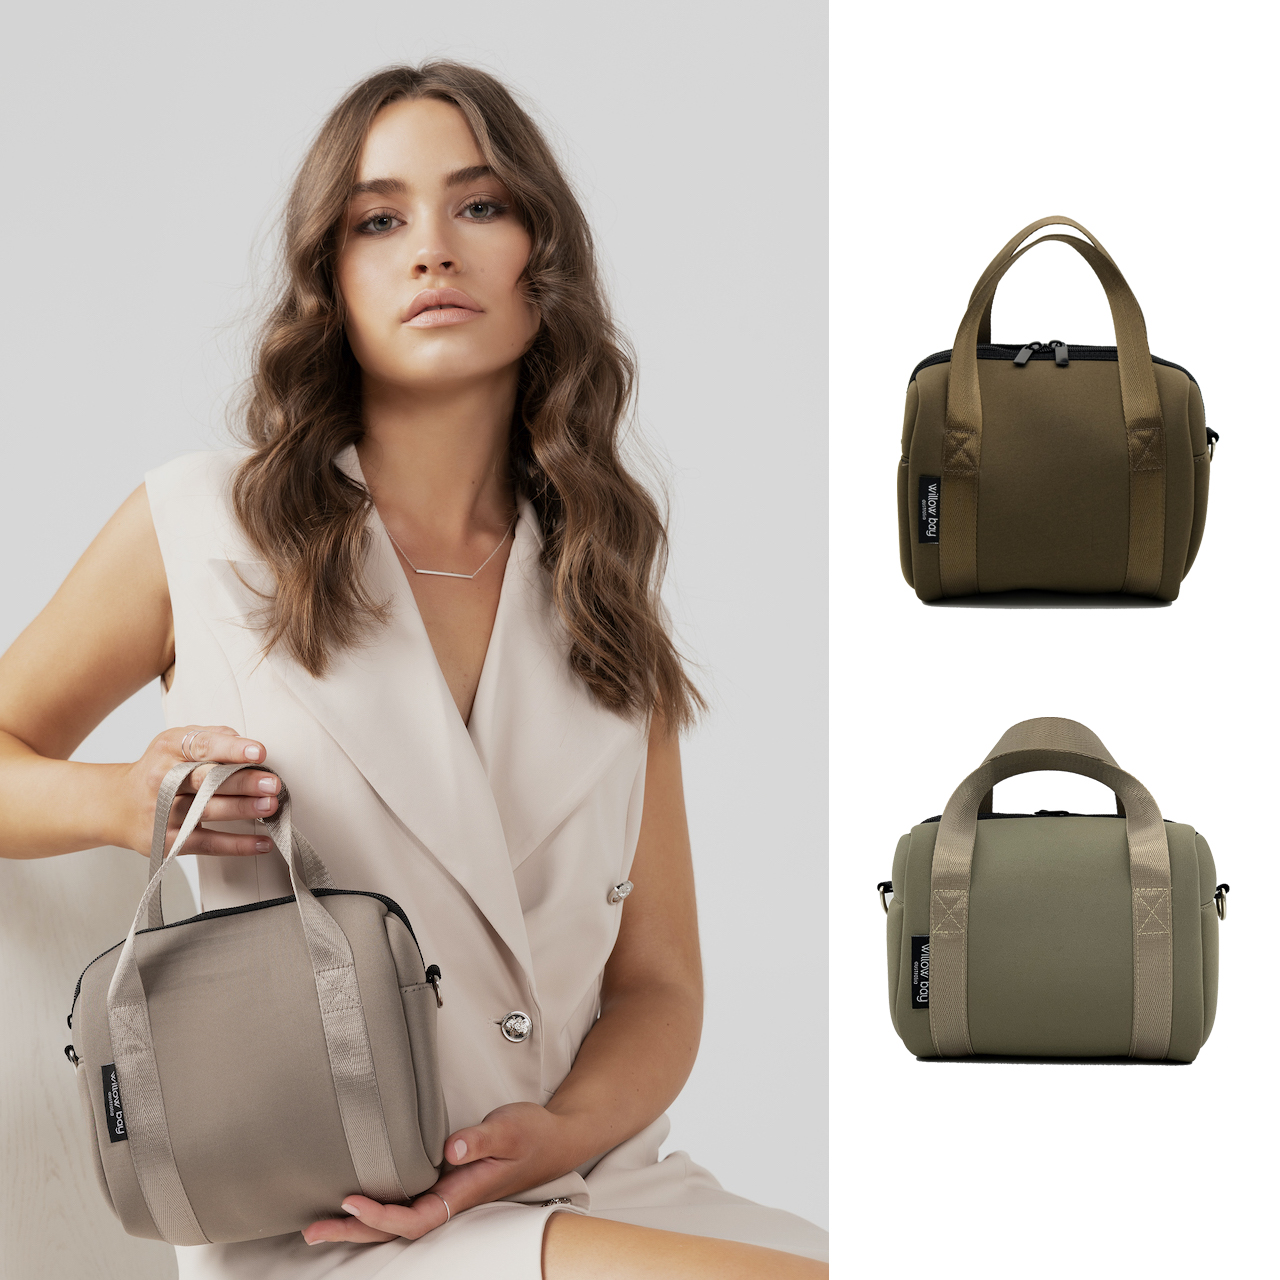 Willow Bay White Neoprene Mini Tote Bag - Boutique Luxury Handbag w/ Segmented Pockets, Removable Base, Double Eyelets, Fully Lined, Machine Washable